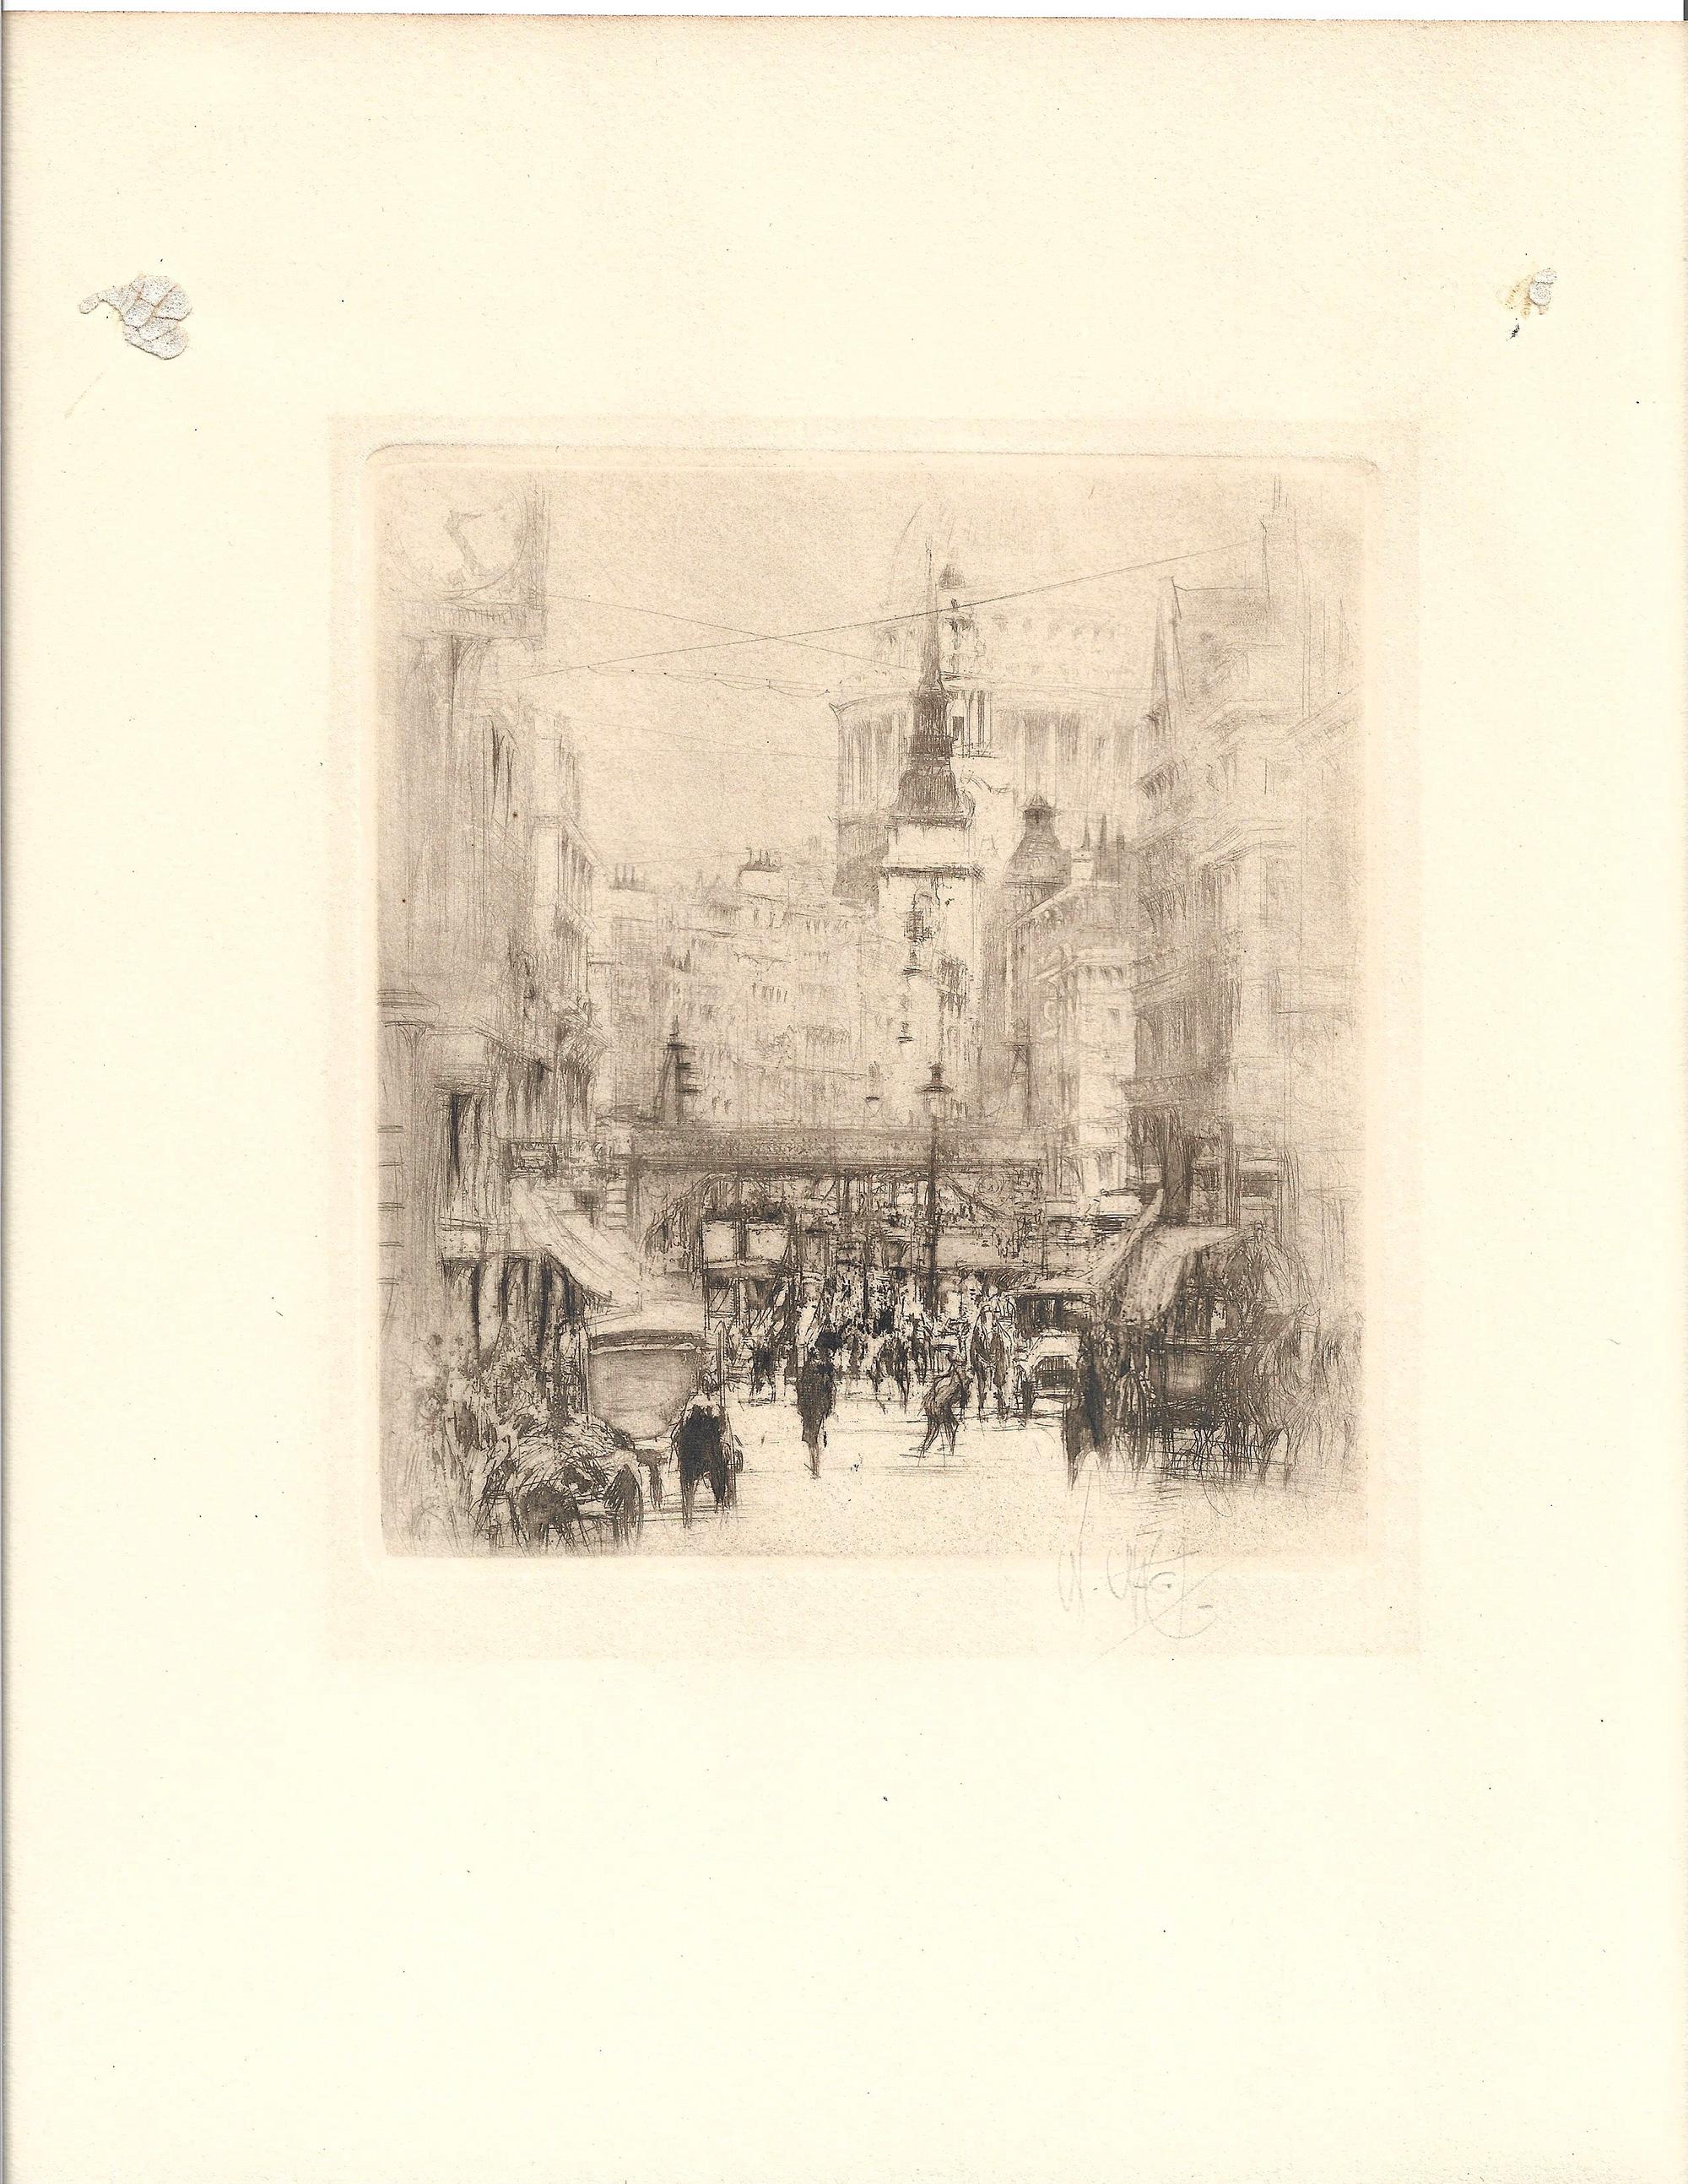  Ludgate Hill - Print by William Walcot, R.E., Hon.R.I.B.A.